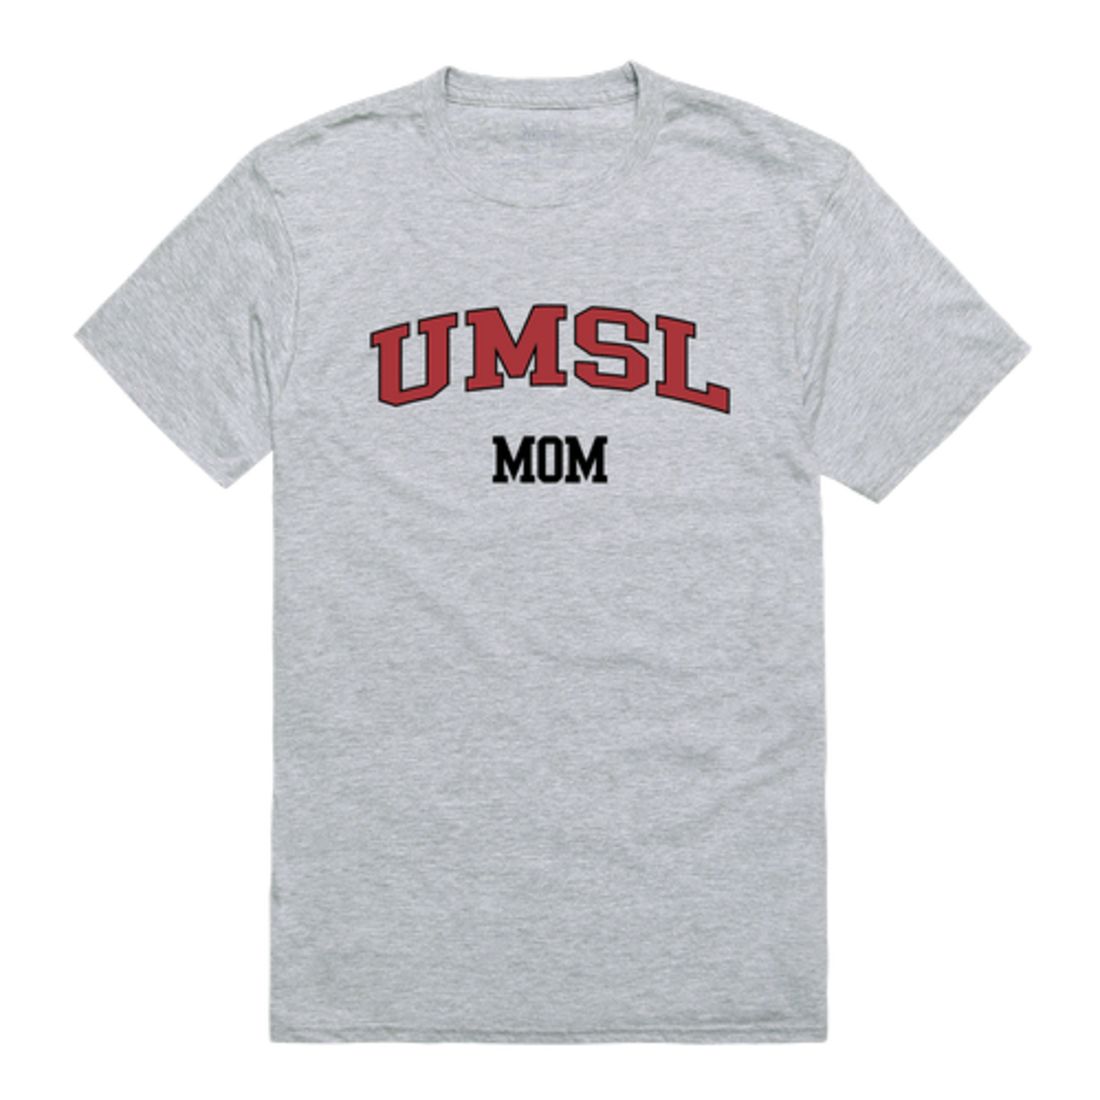 University of Missouri-Saint Louis Tritons Mom T-Shirts